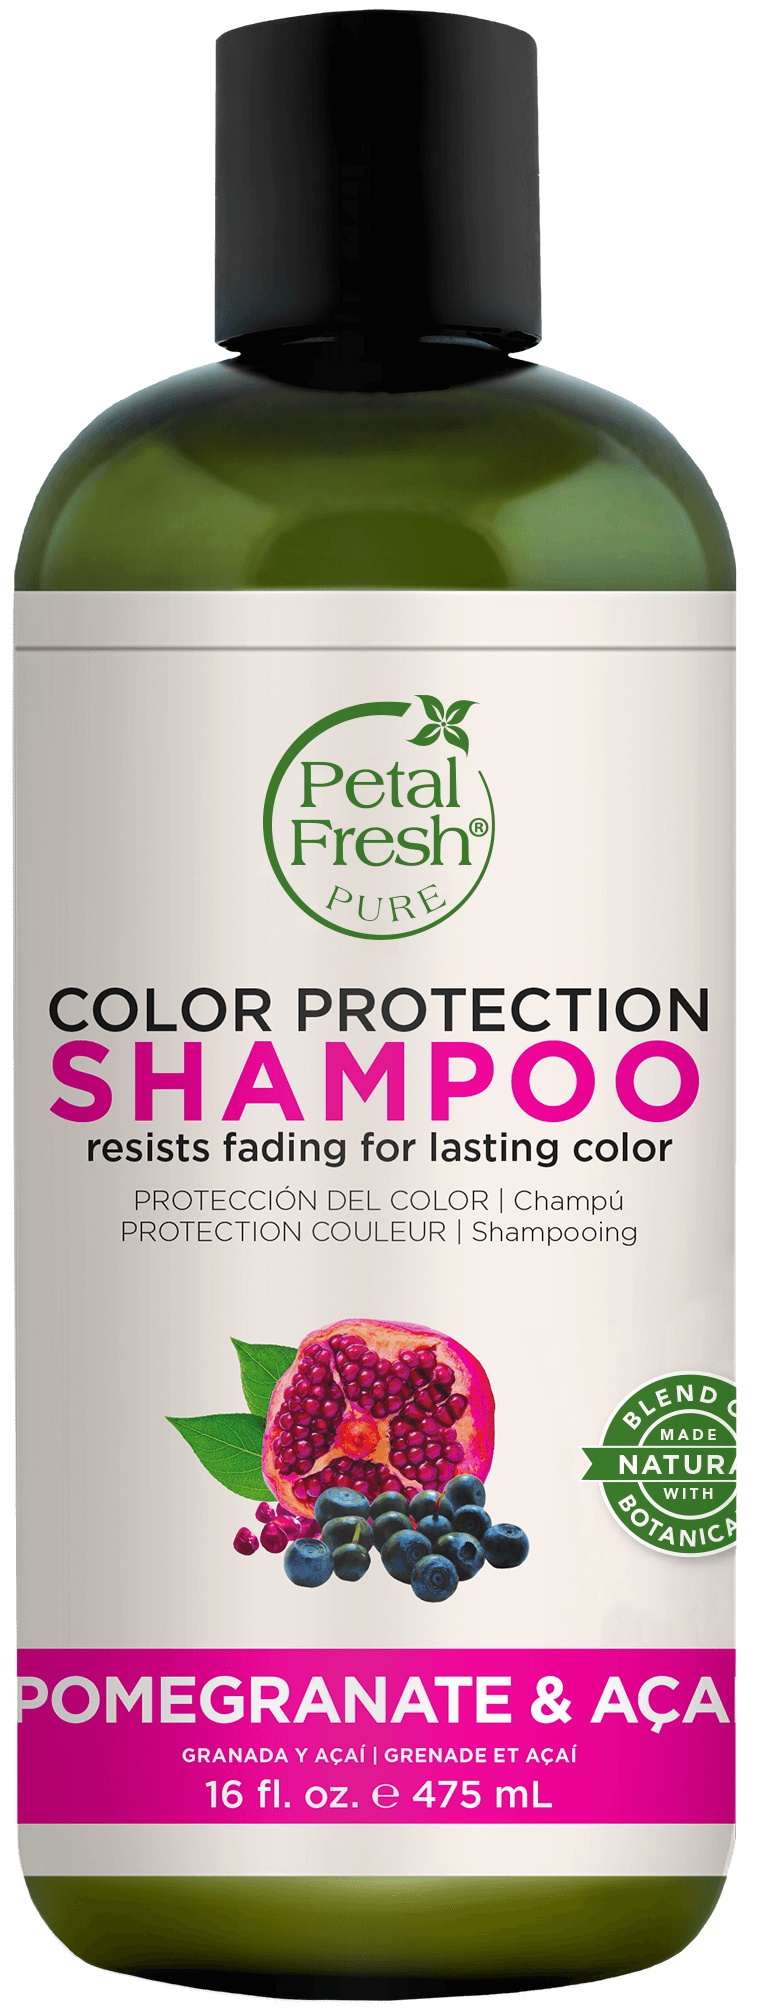 Petal Fresh Pomegranate & Acai Shampoo